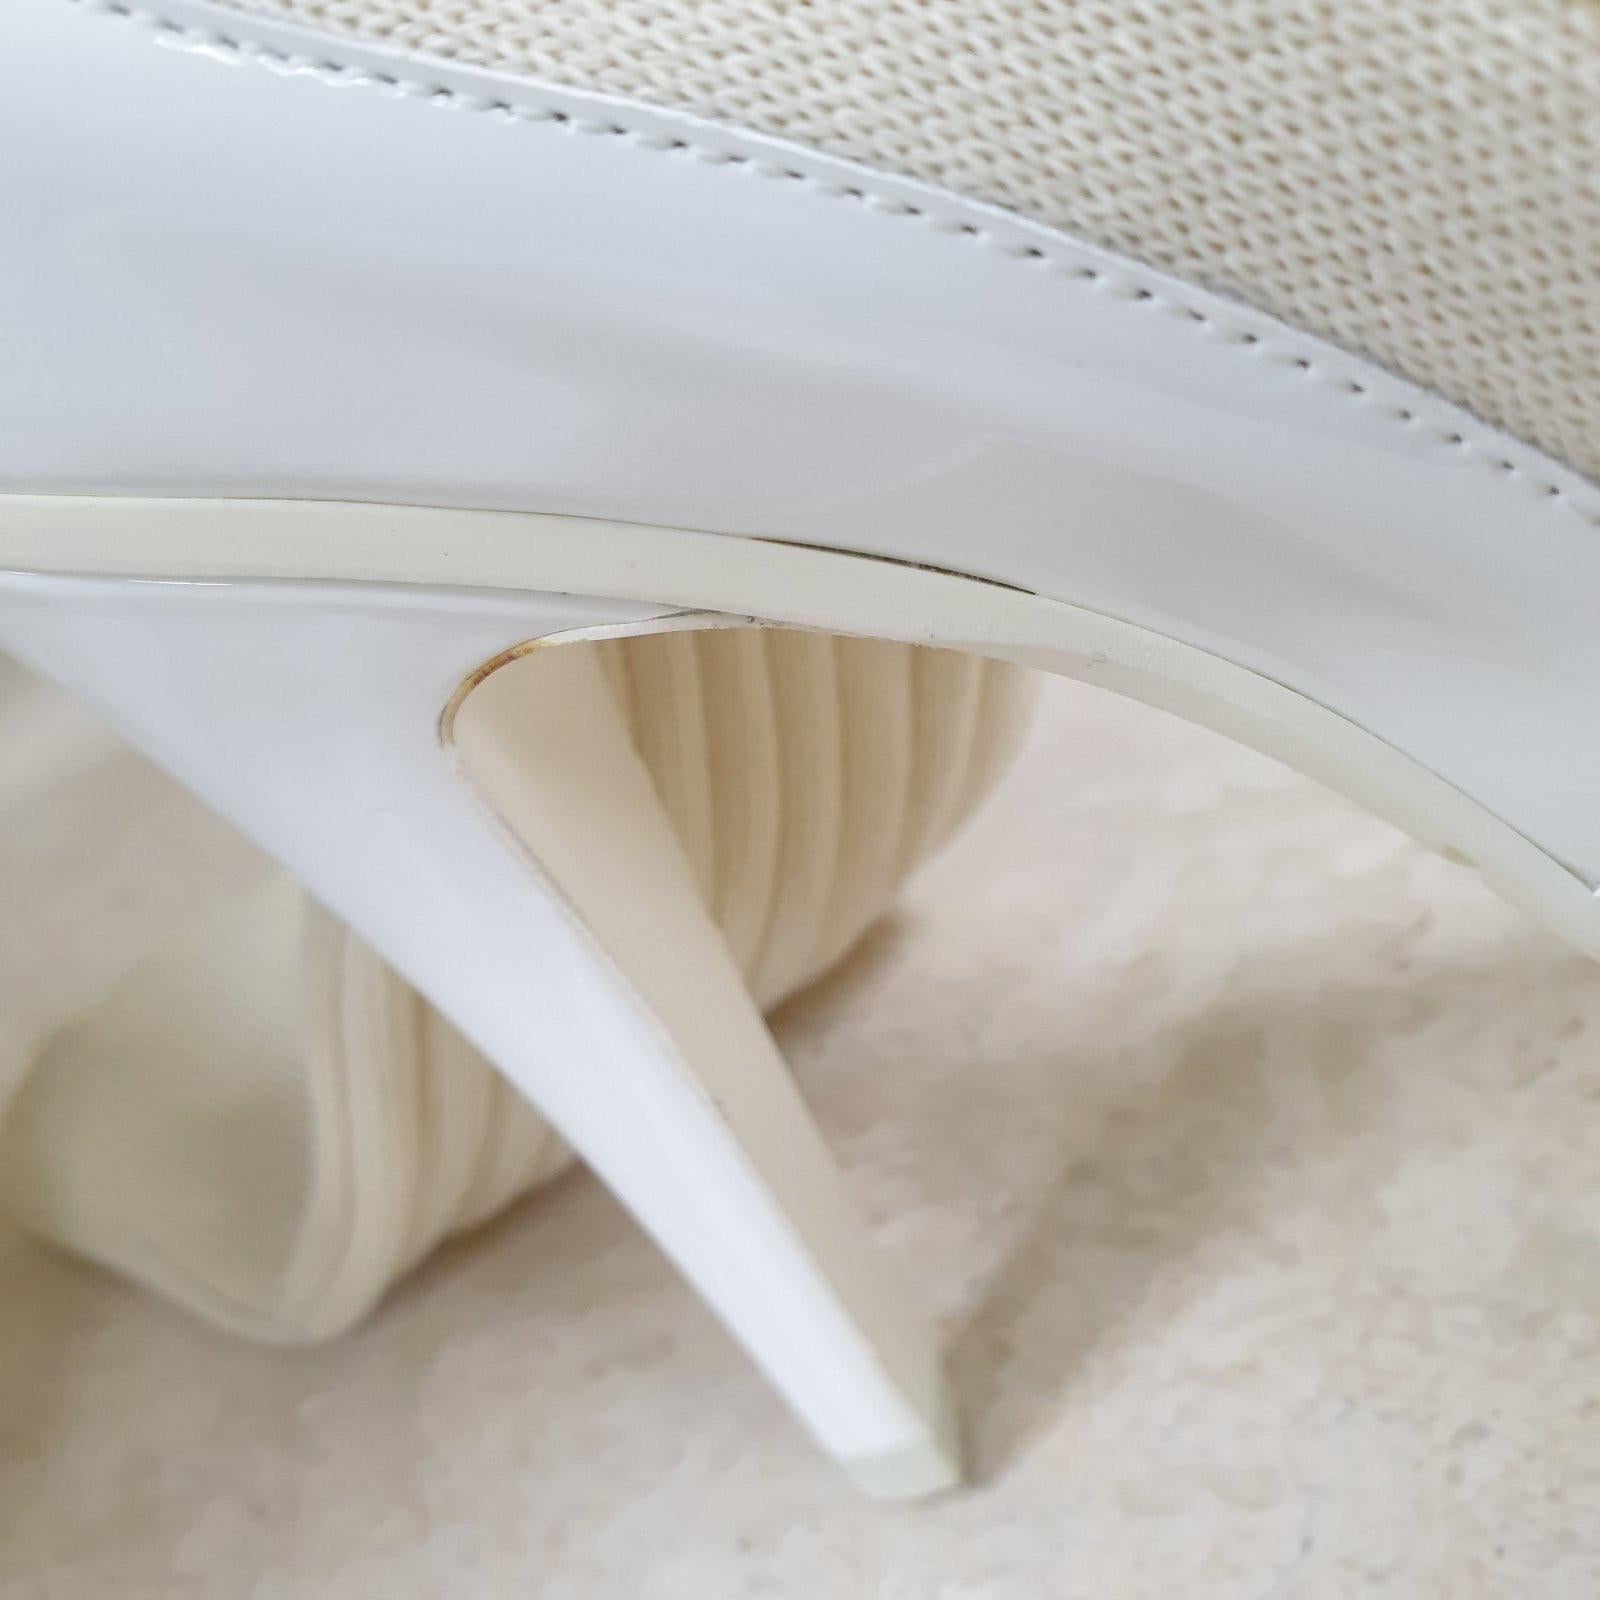 CHANEL Paris Dubai White Patent Leather Knitted Pumps Heels 1